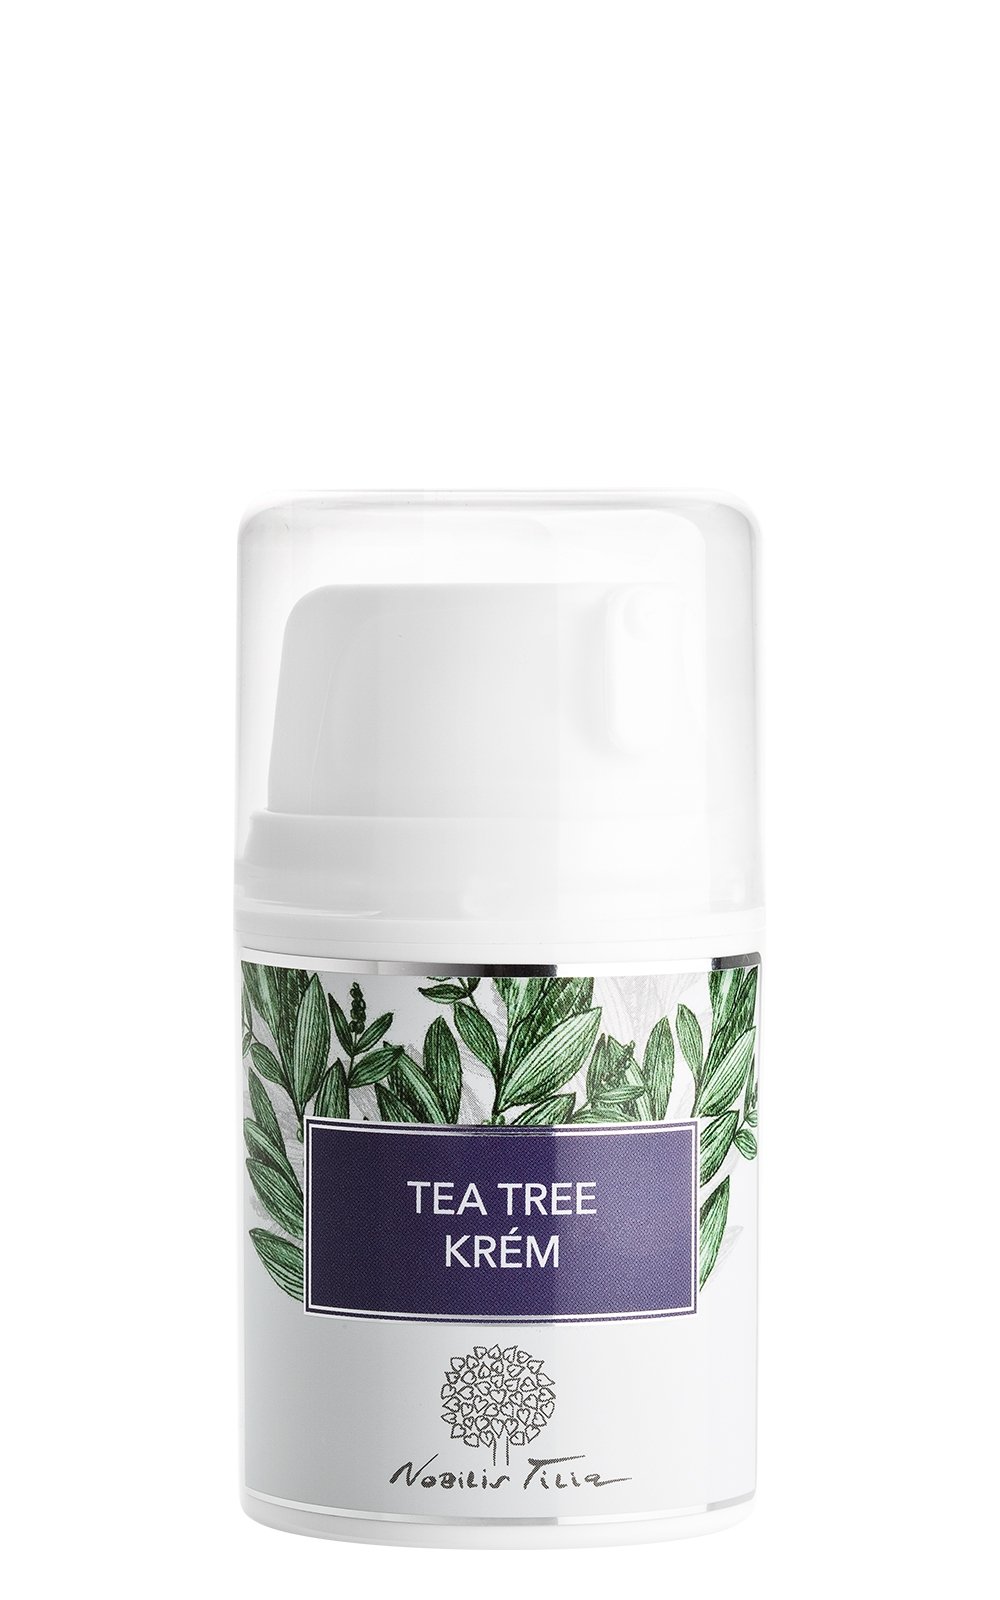 Tea tree krém